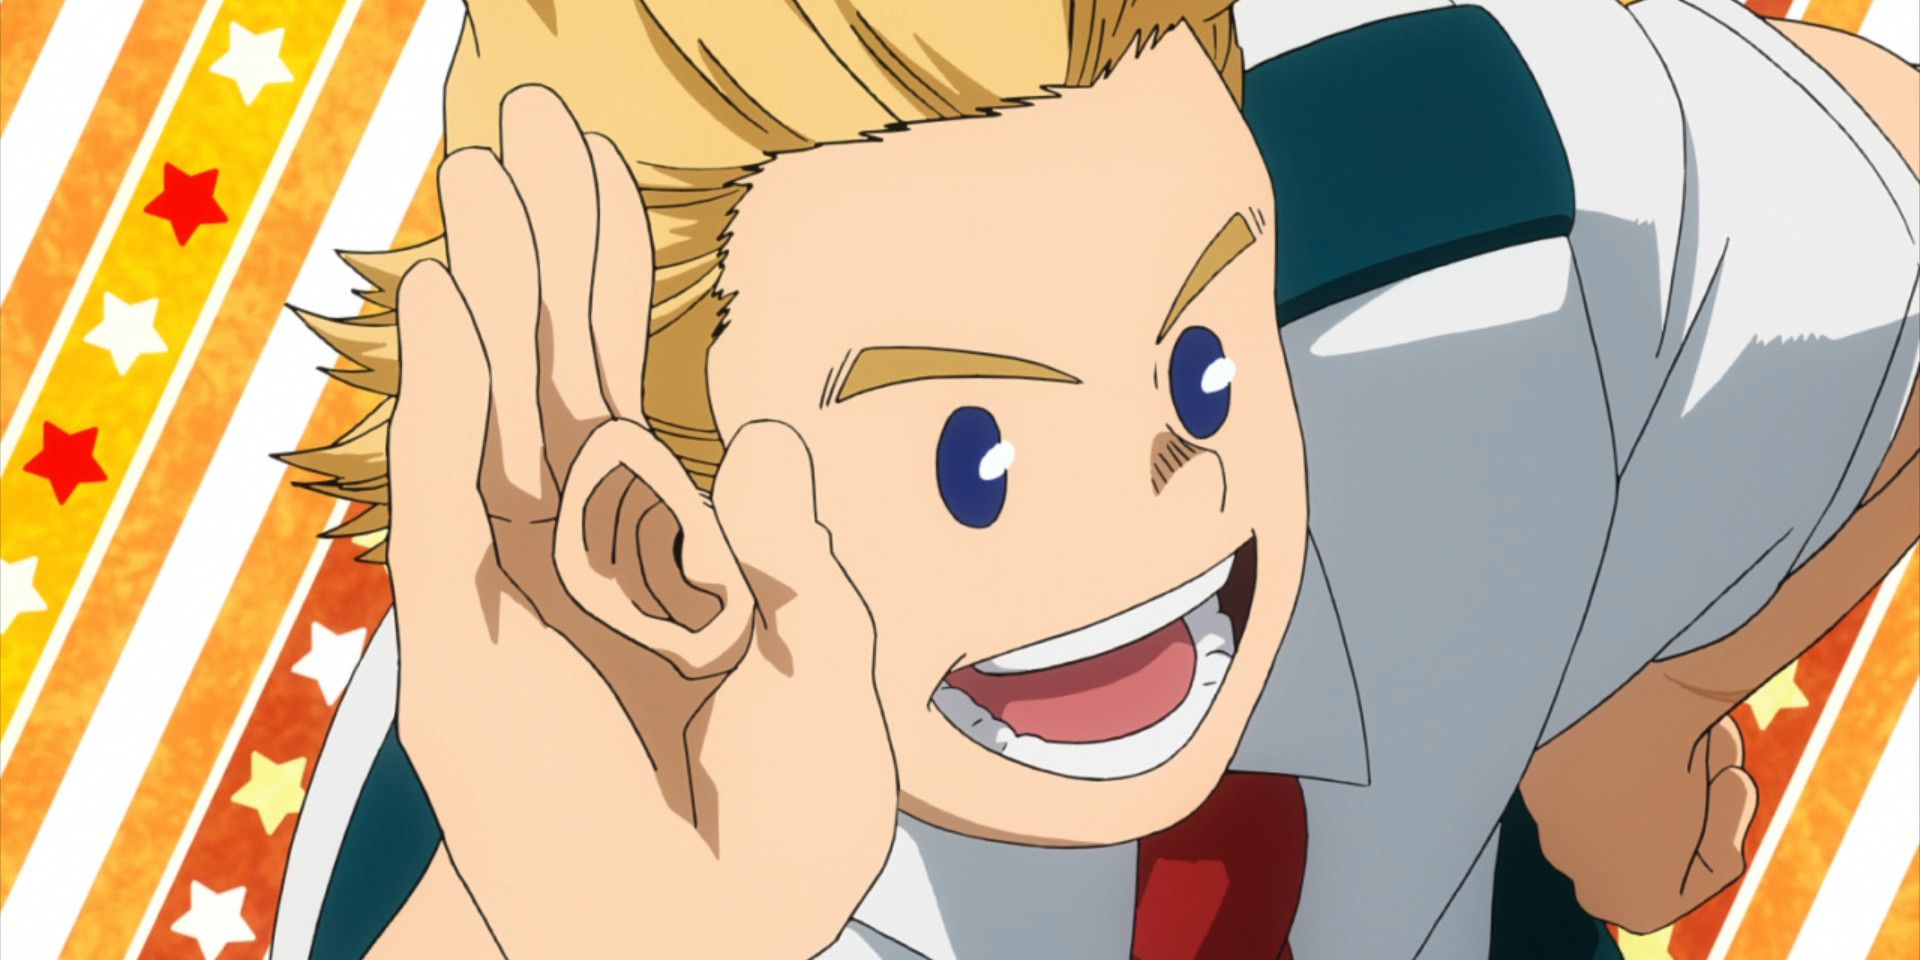 Anime Shonen Mirio Togata gesturing to his ear MHA